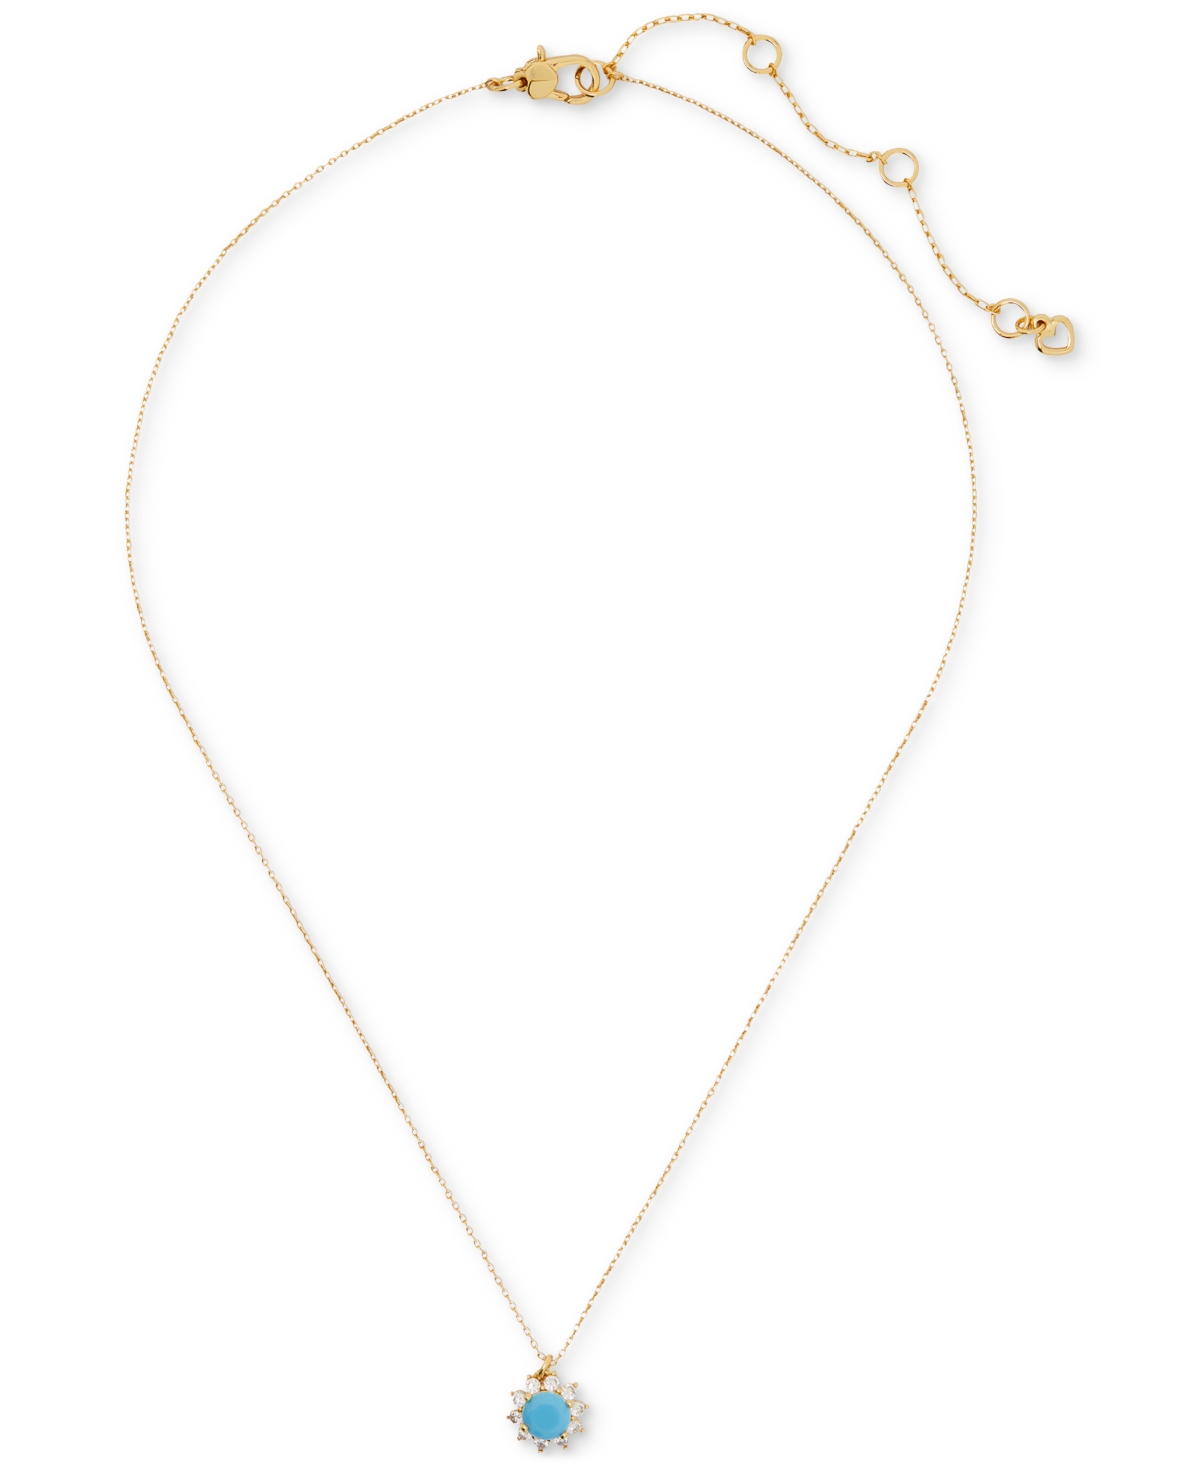 Gold-Tone Cubic Zirconia Halo Pendant Necklace, 16" + 3" extender - Turquoise.